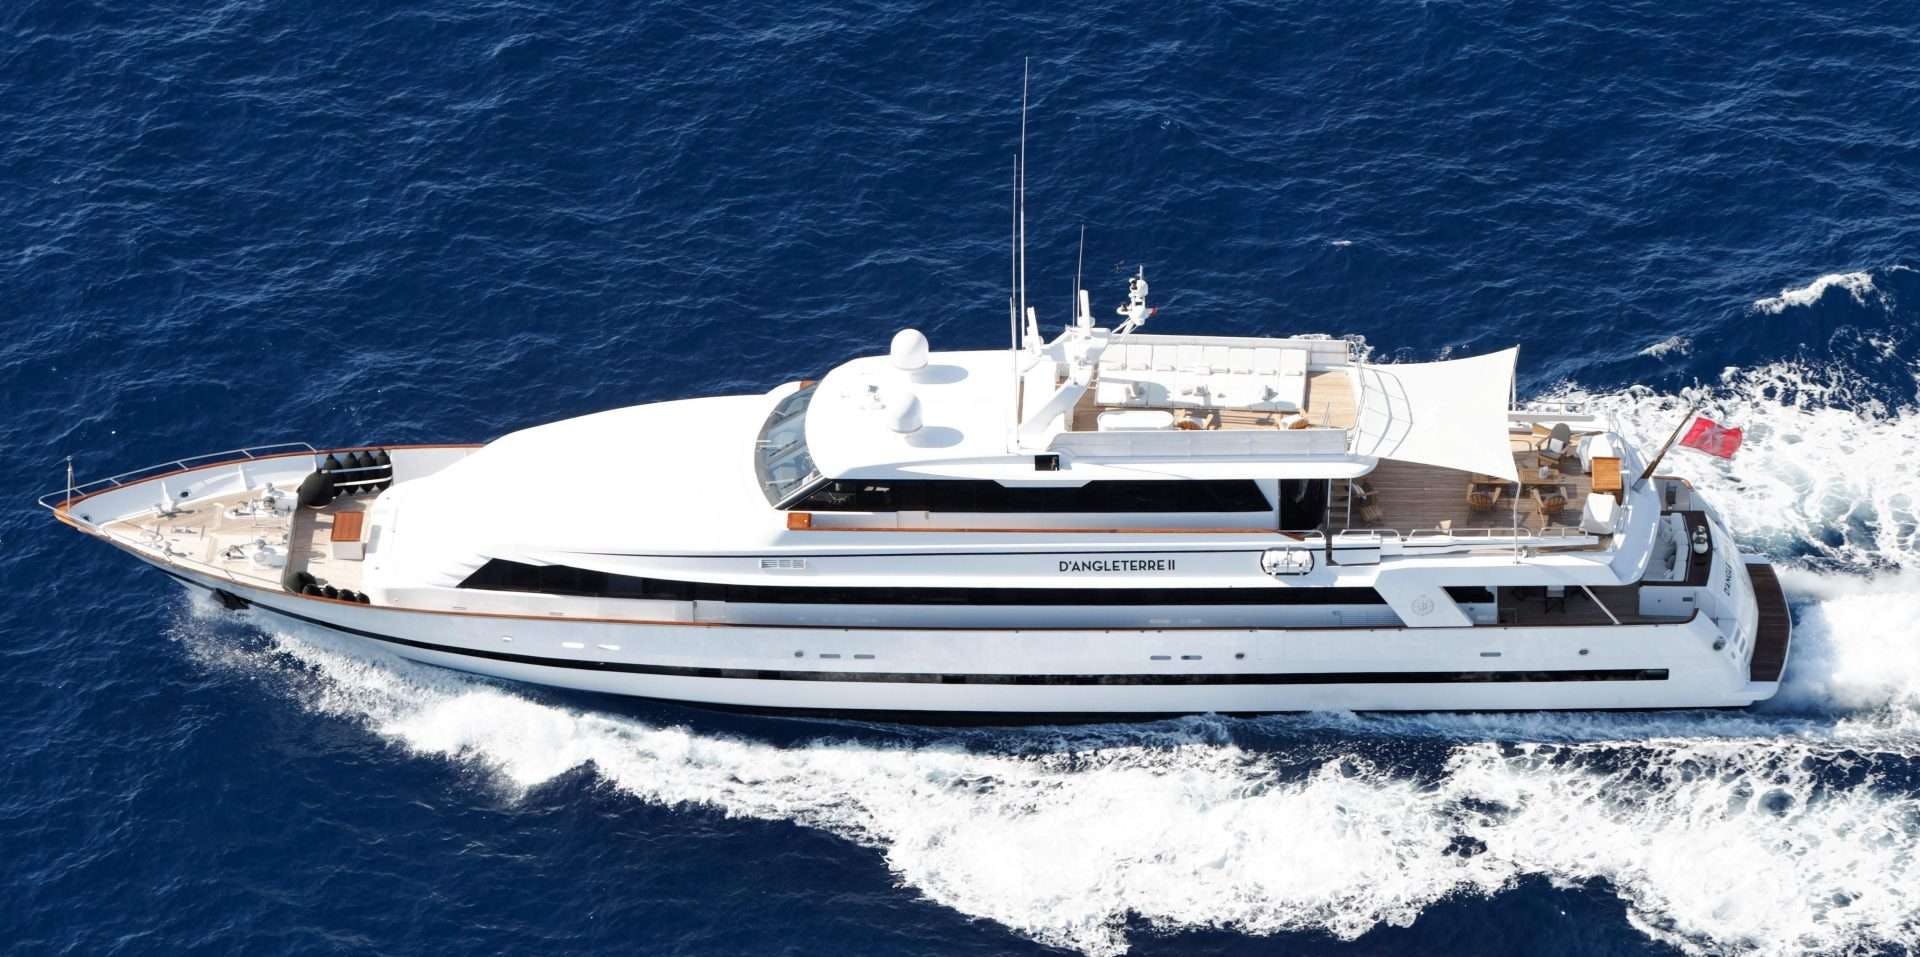 SEA LADY II - Yacht Charter Portorož & Boat hire in W. Med -Naples/Sicily, W. Med -Riviera/Cors/Sard., W. Med - Spain/Balearics 1